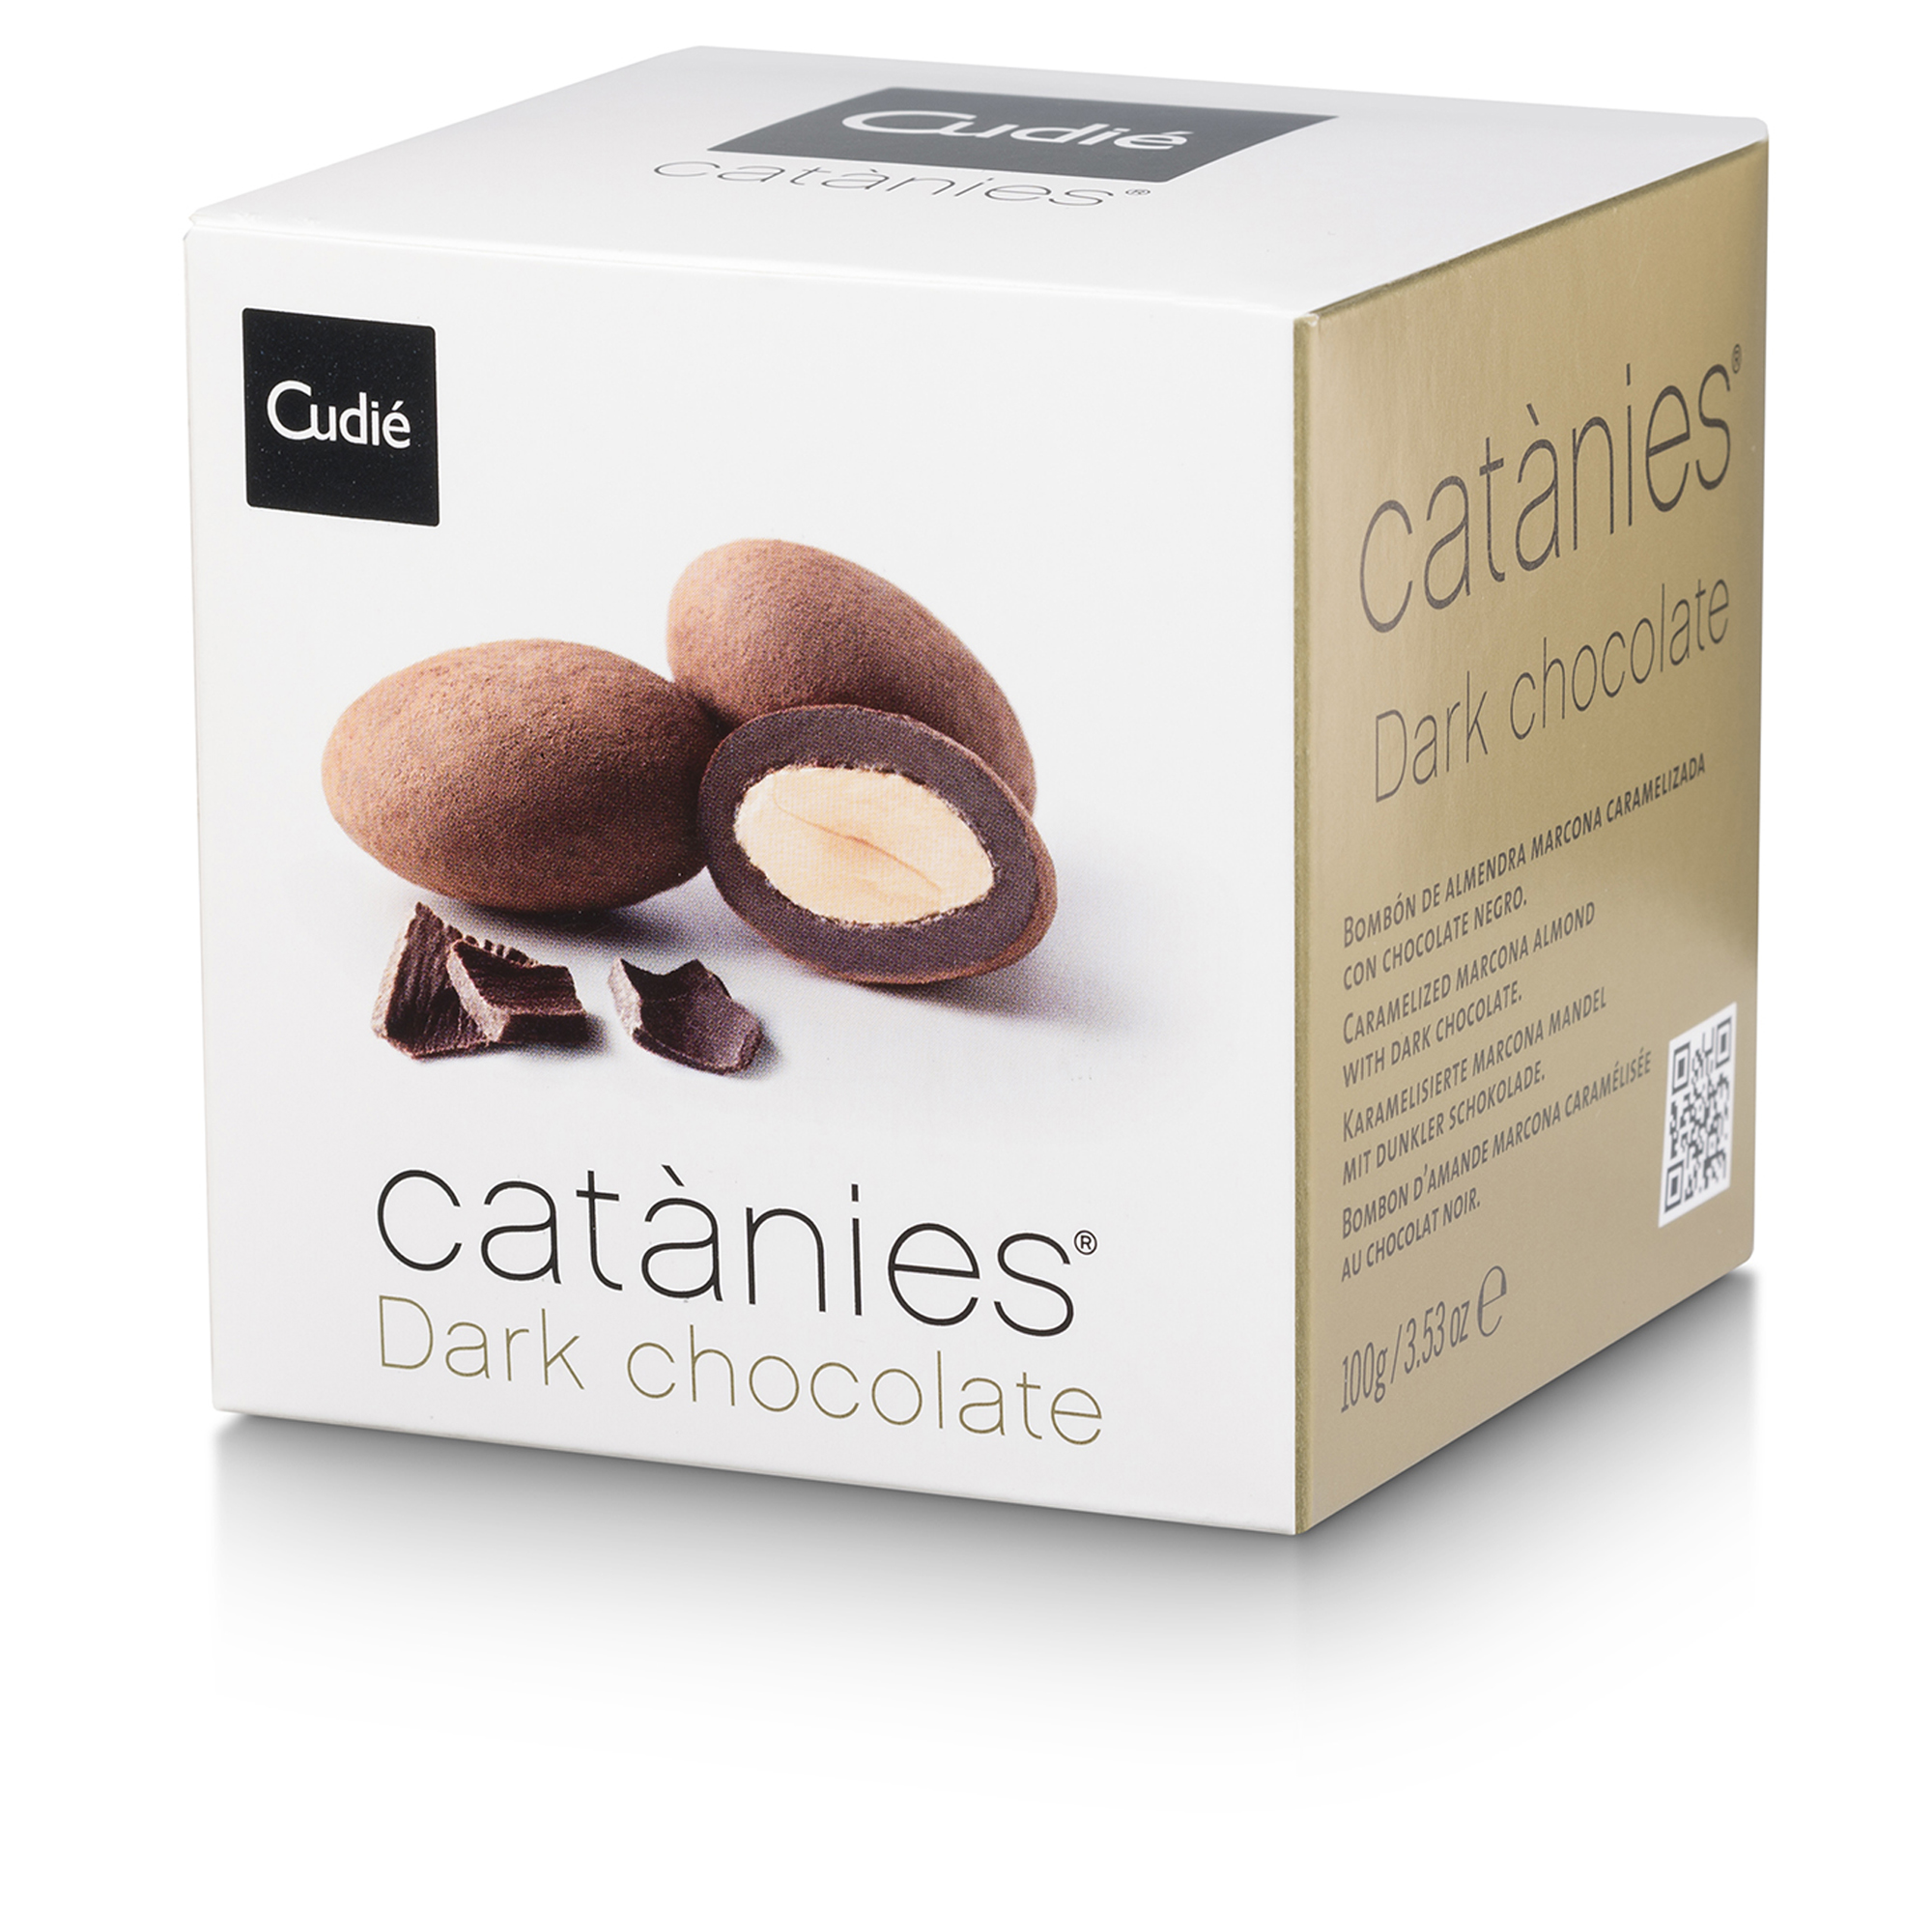 Cudié Catànies® Dark Chocolate